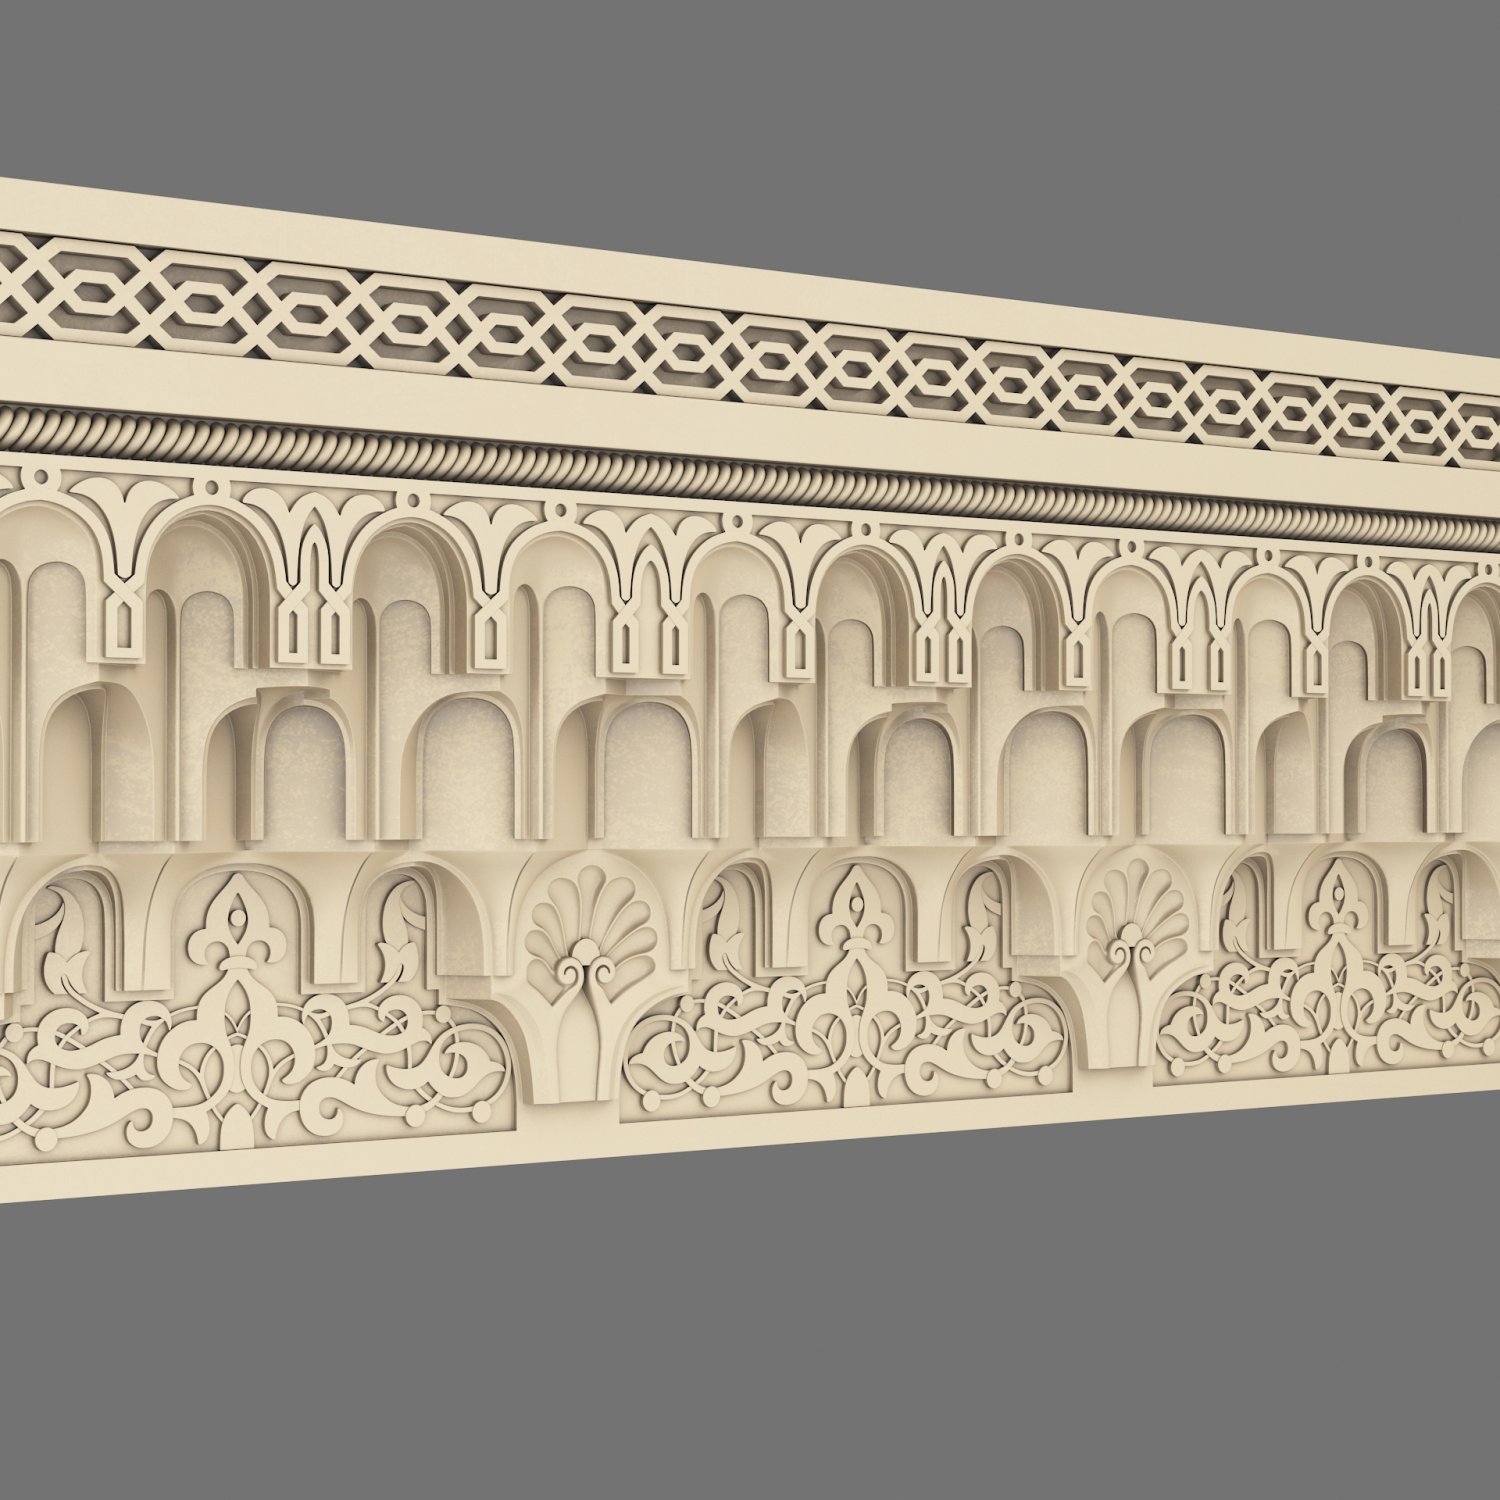 Islamic miniatures in 3D